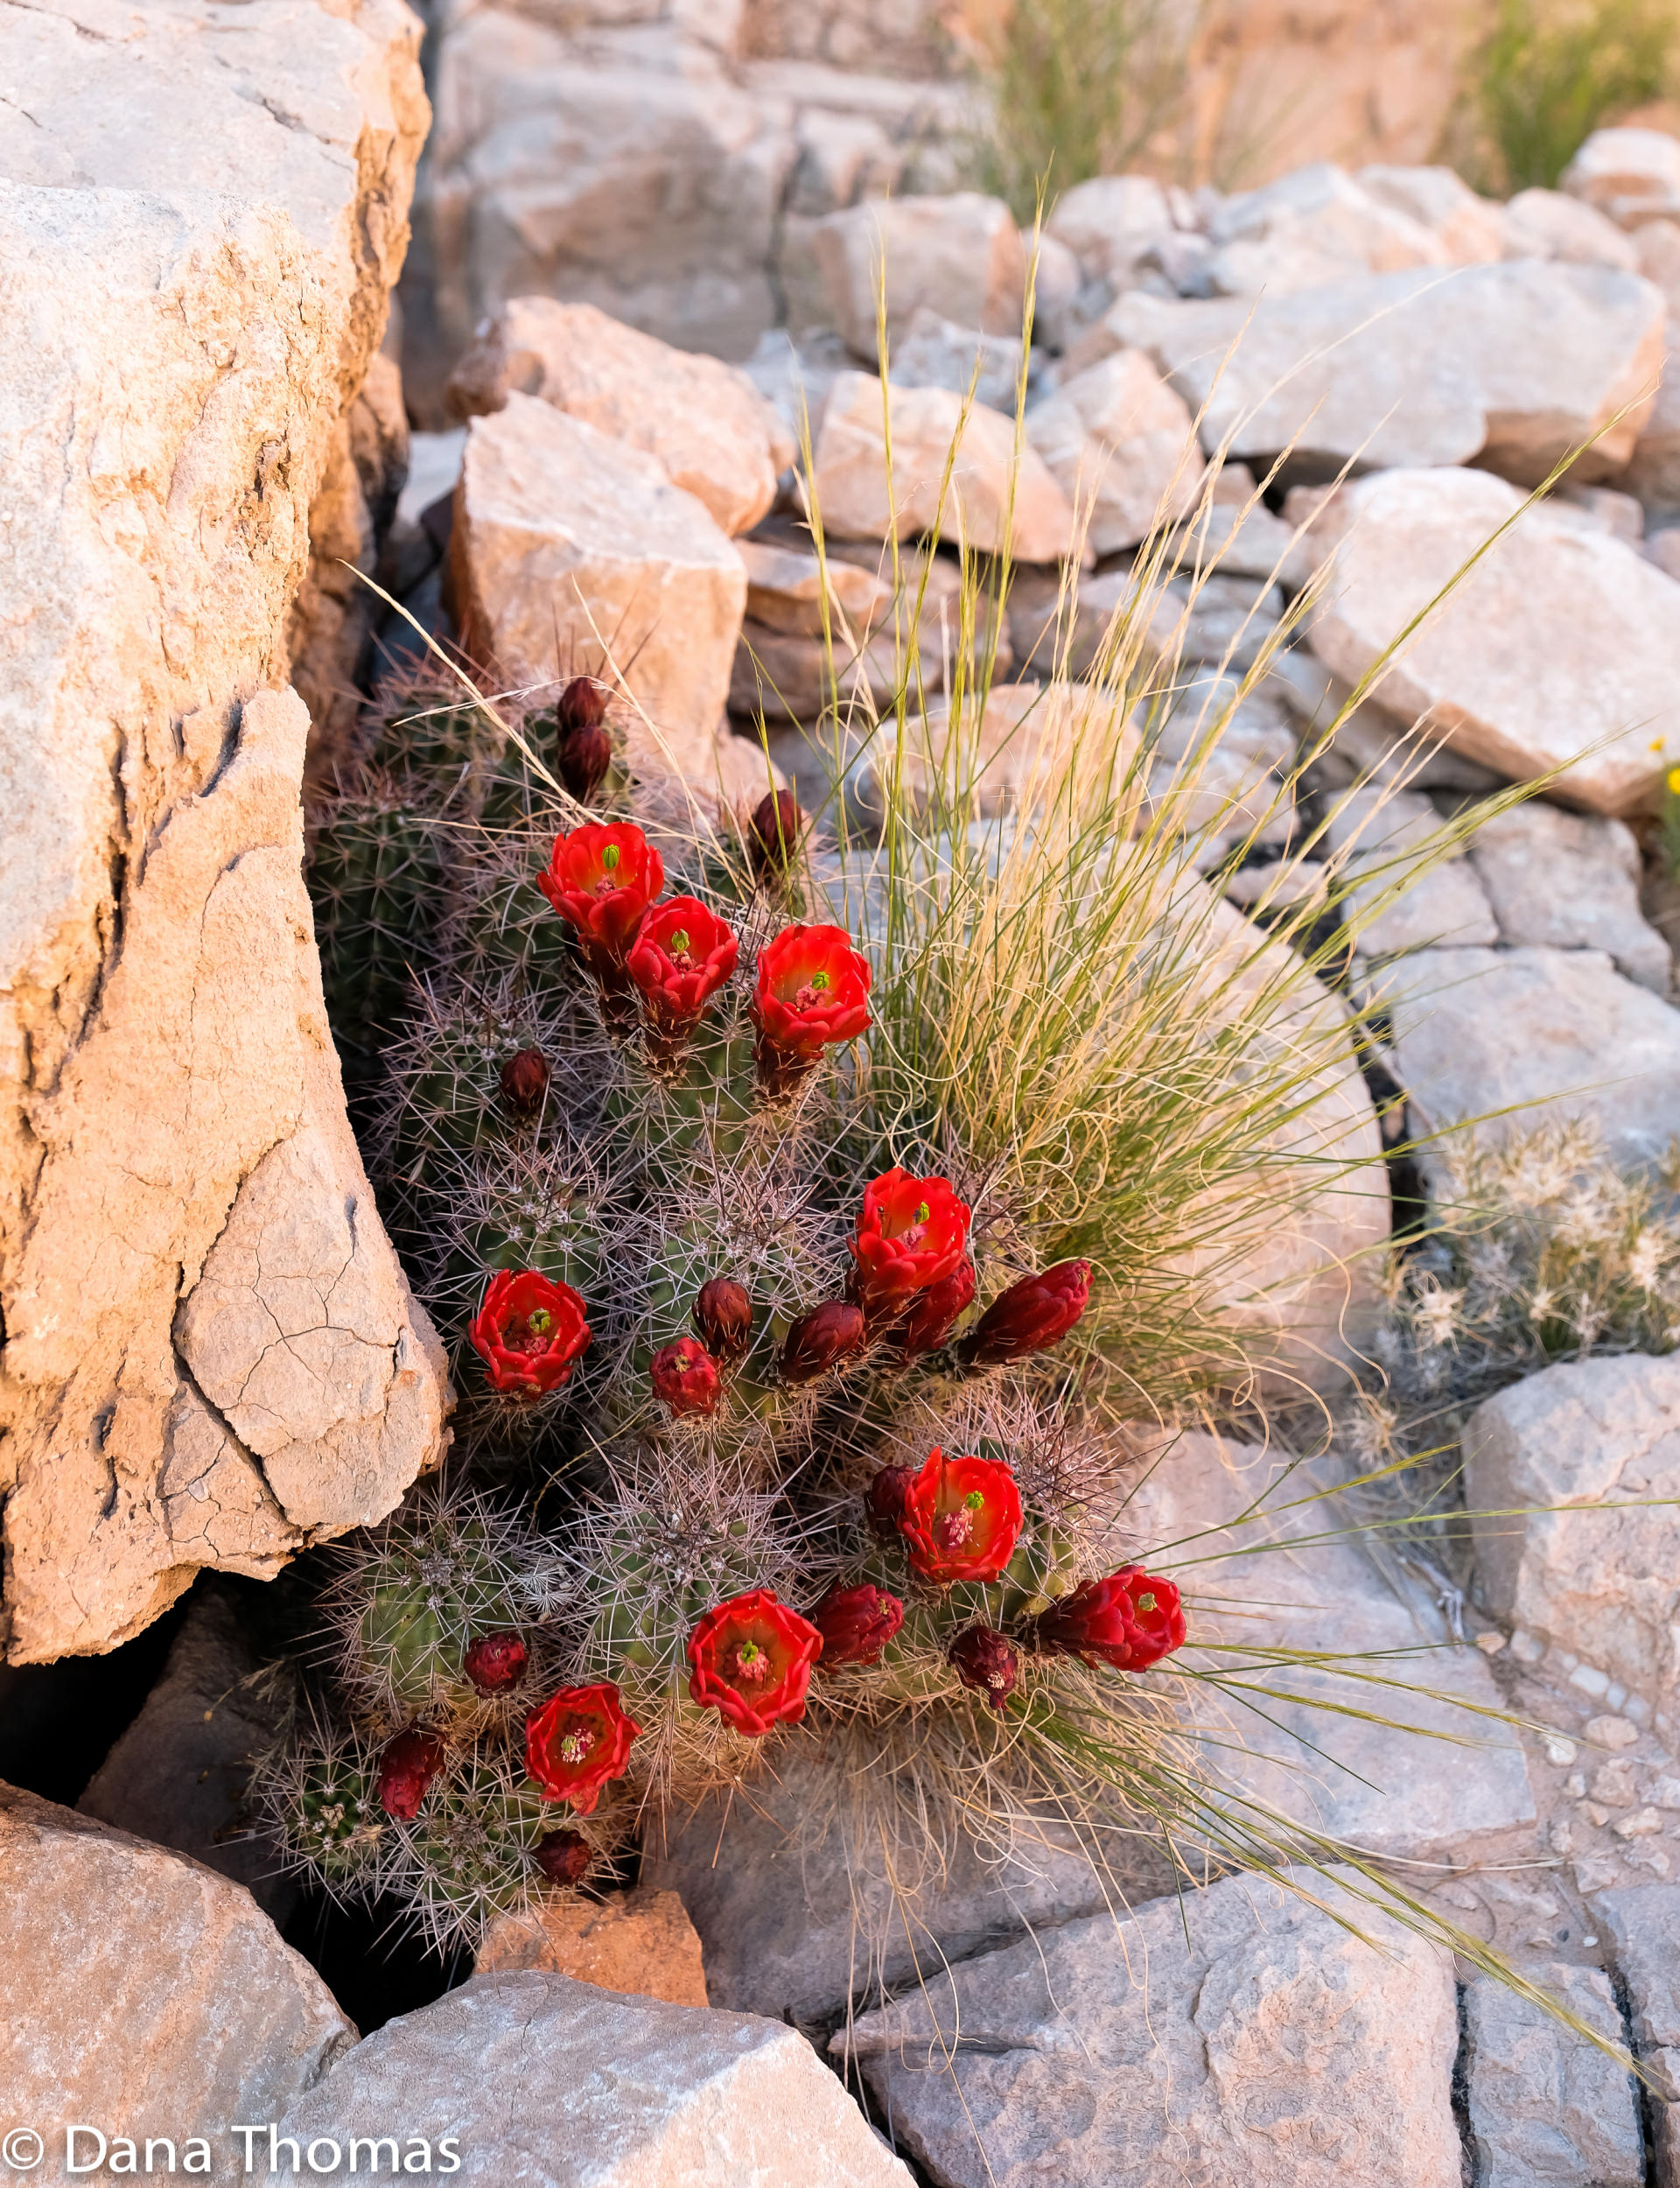 Claret-Cup Cactus, Grand Canyon, Arizona : Grand Canyon  : Dust and Mud - Photography by Dana Thomas